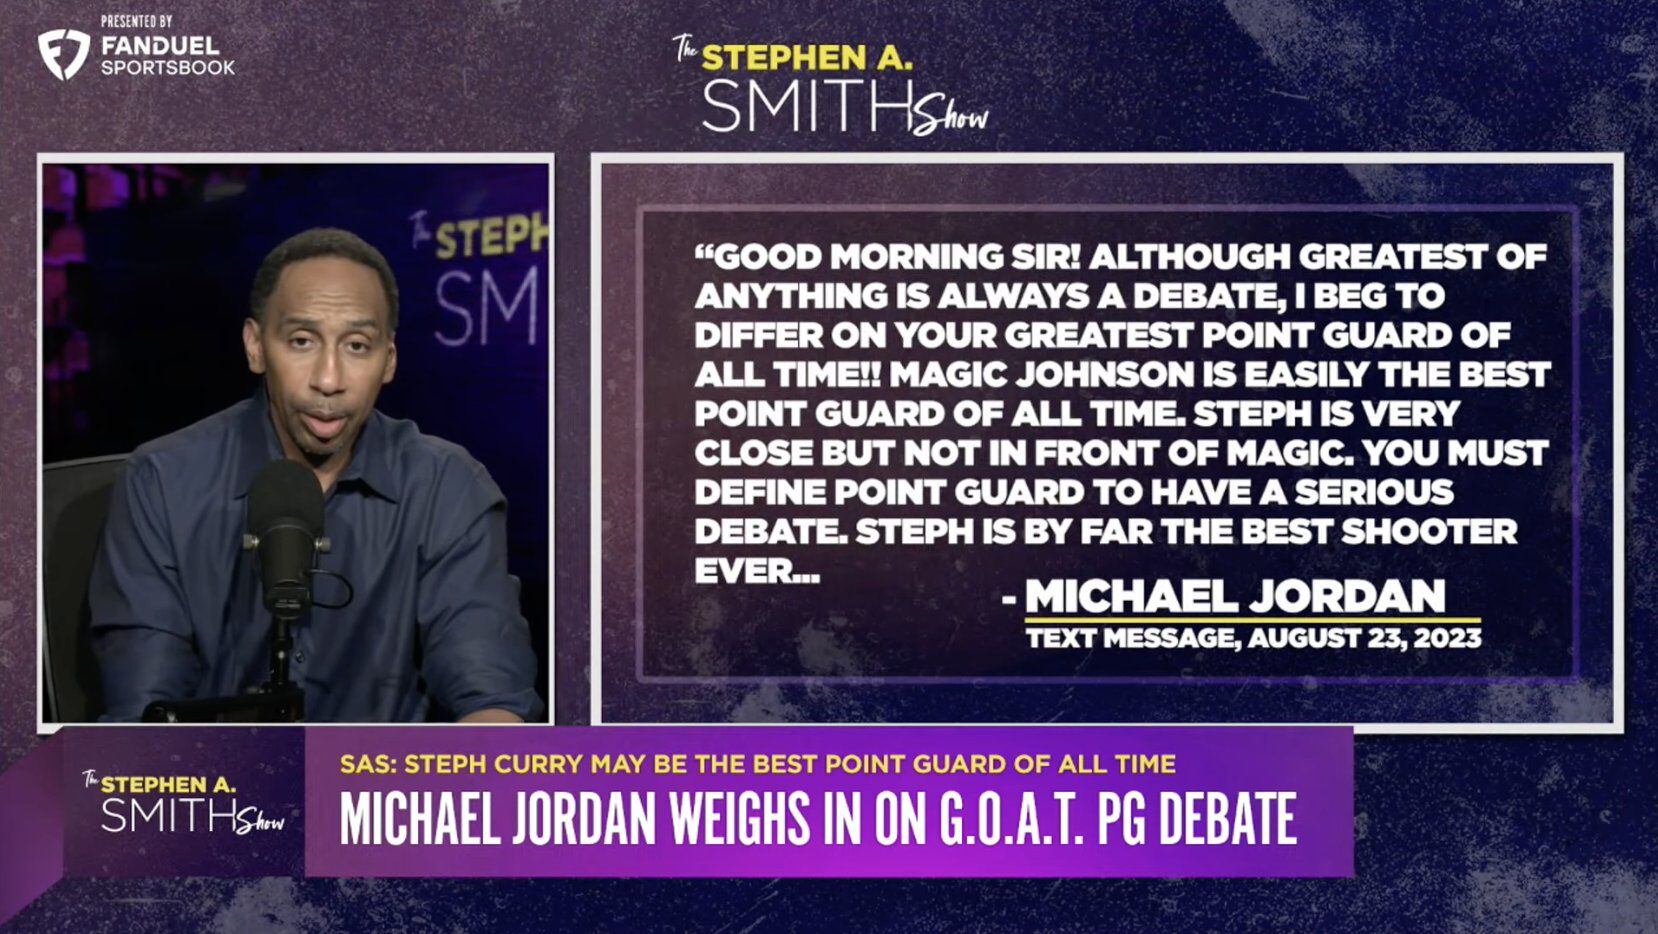 El mensaje de texto que envió Michael Jordan al periodista Stephen Smith de ESPN